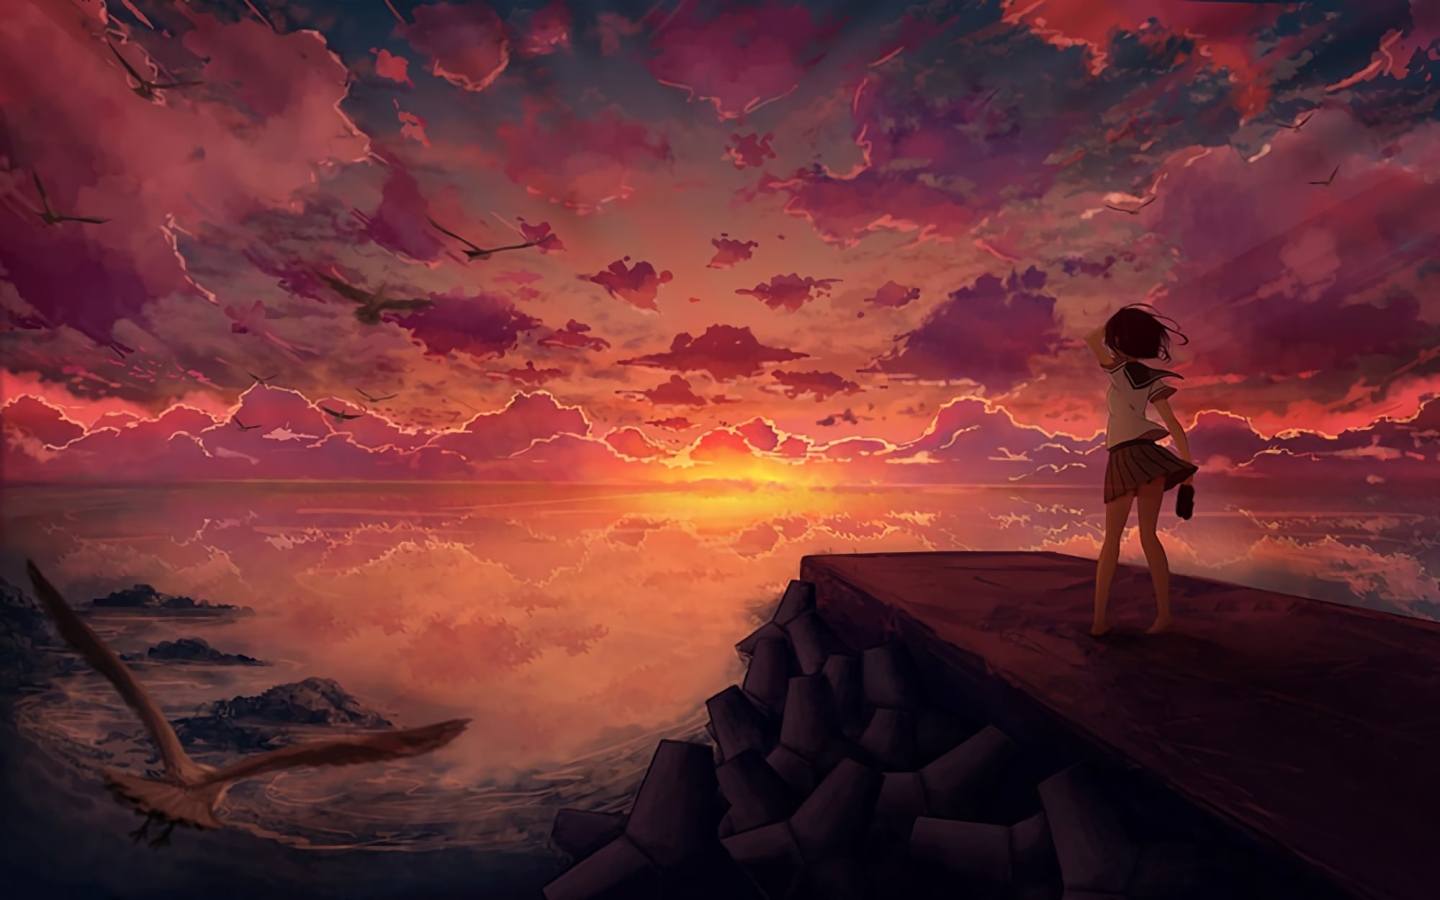 1440x900 Anime Girl Looking at Sky 1440x900 Wallpaper, HD ...